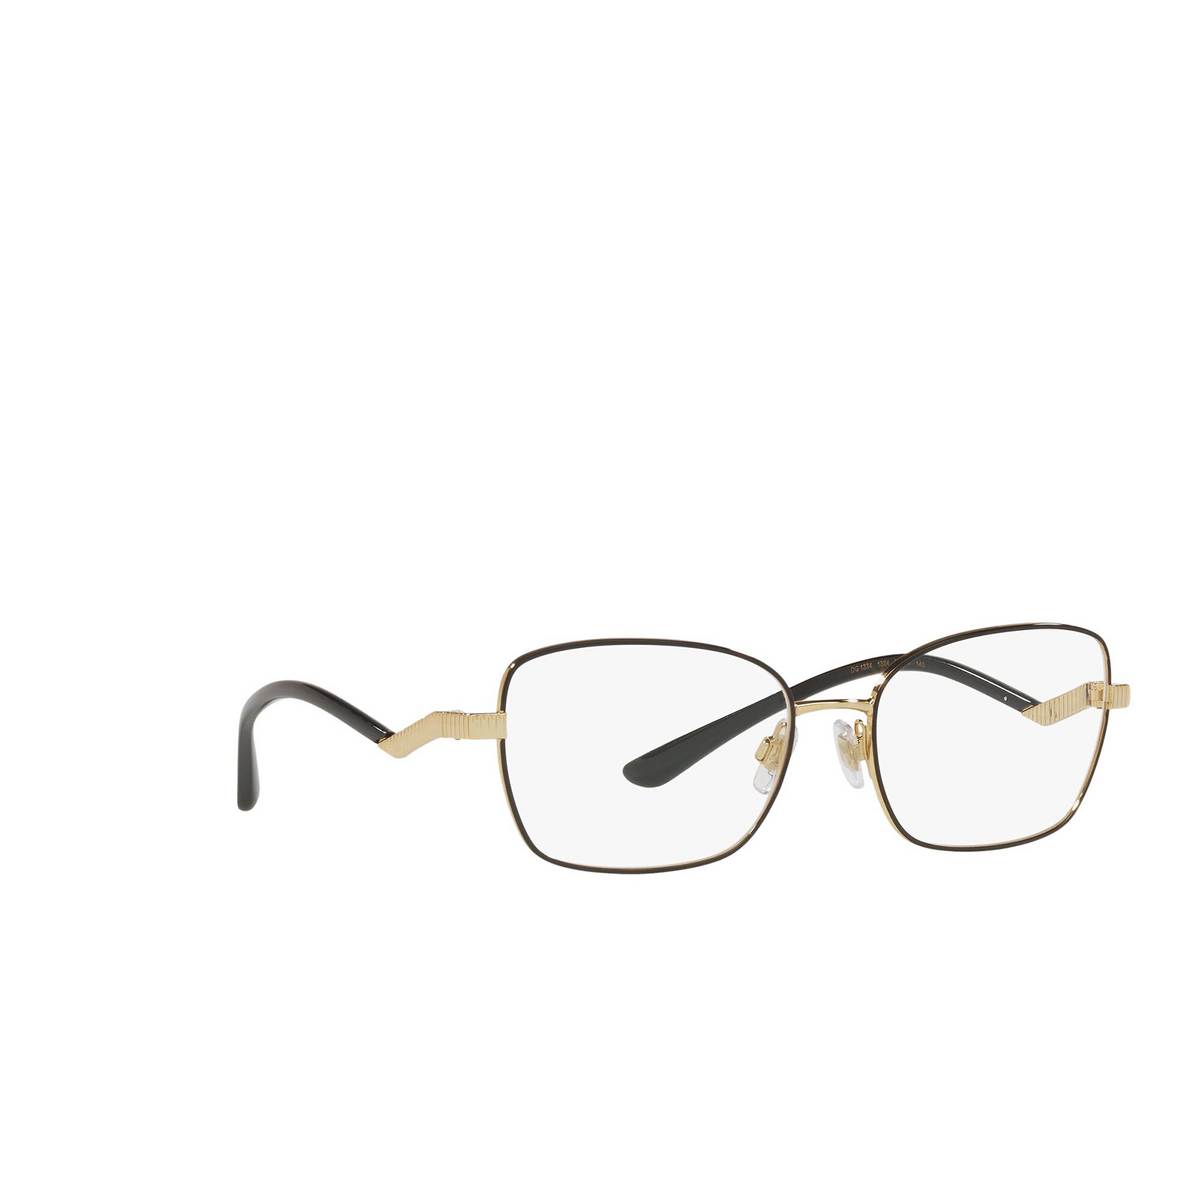 Dolce & Gabbana® Rectangle Eyeglasses: DG1334 color Gold / Black 1334 - three-quarters view.